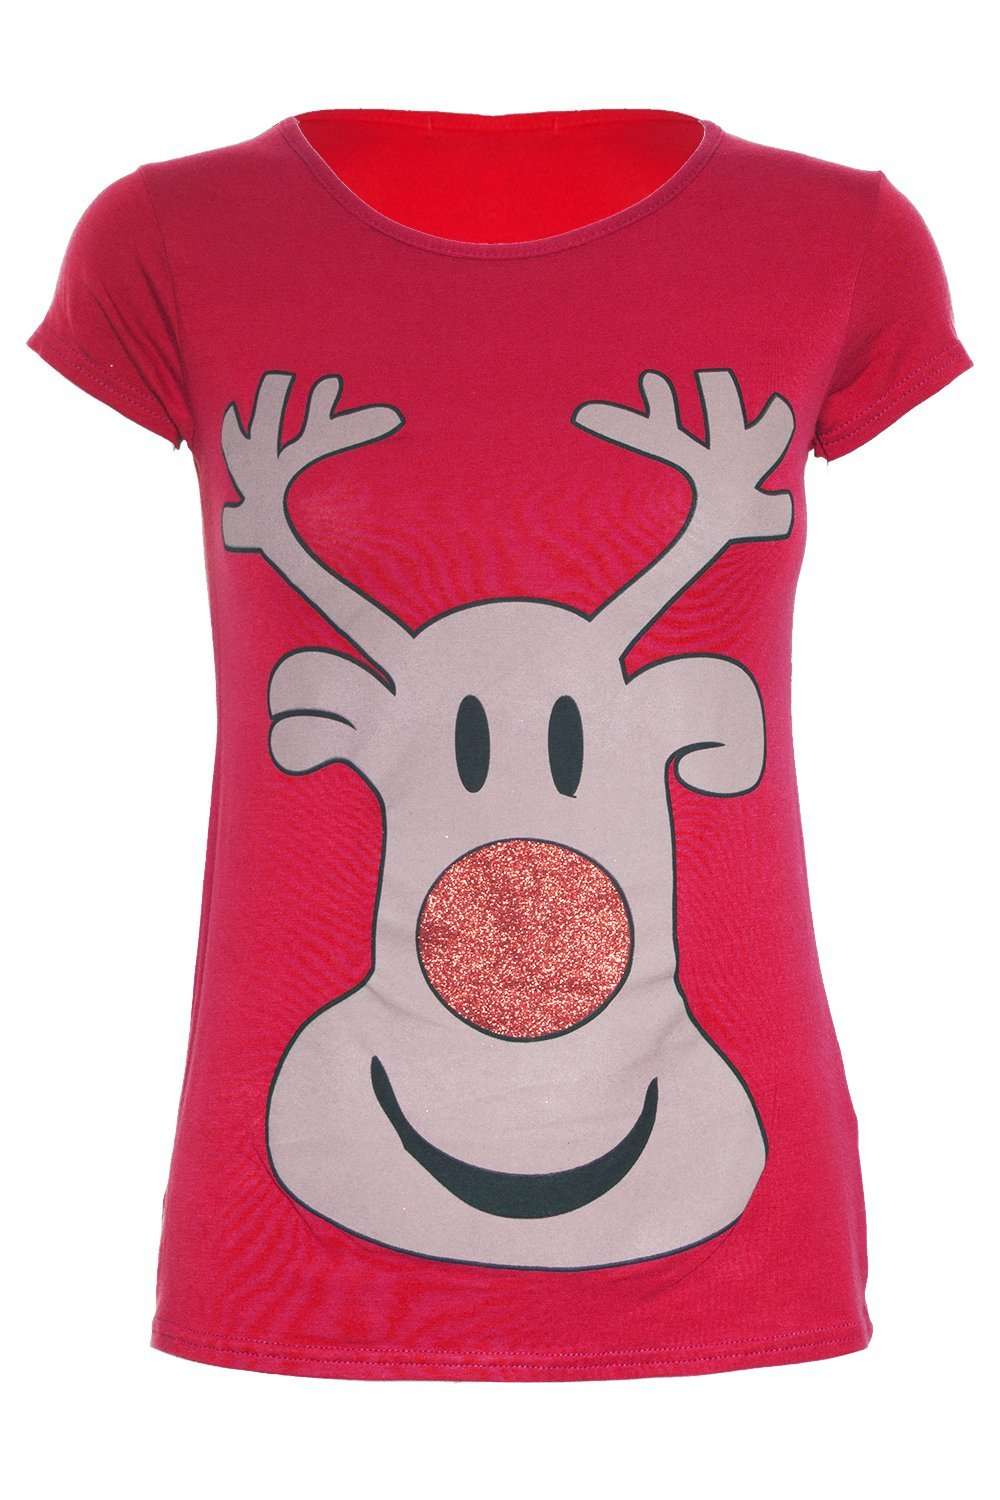 Reindeer Graphic Print Cap Sleeve Christmas Tshirt - bejealous-com